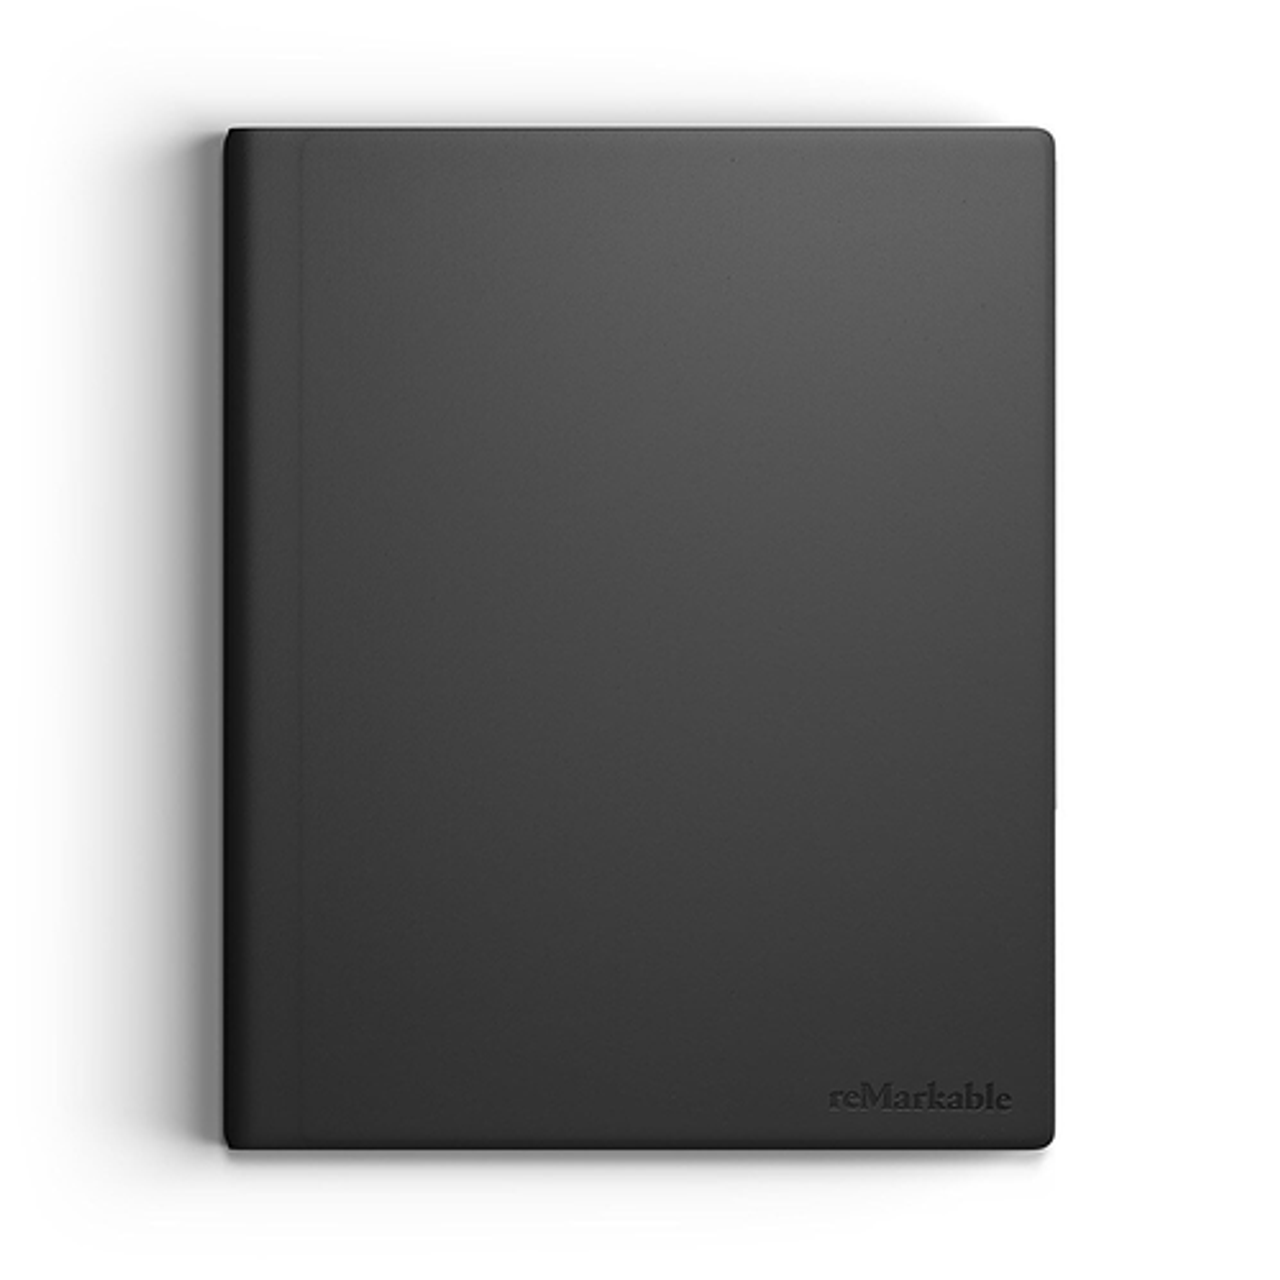 Essentials Bundle: reMarkable 2 Paper Tablet + Marker Plus Digital Pencil + Black Leather Folio Case + 1 Yr Subscription